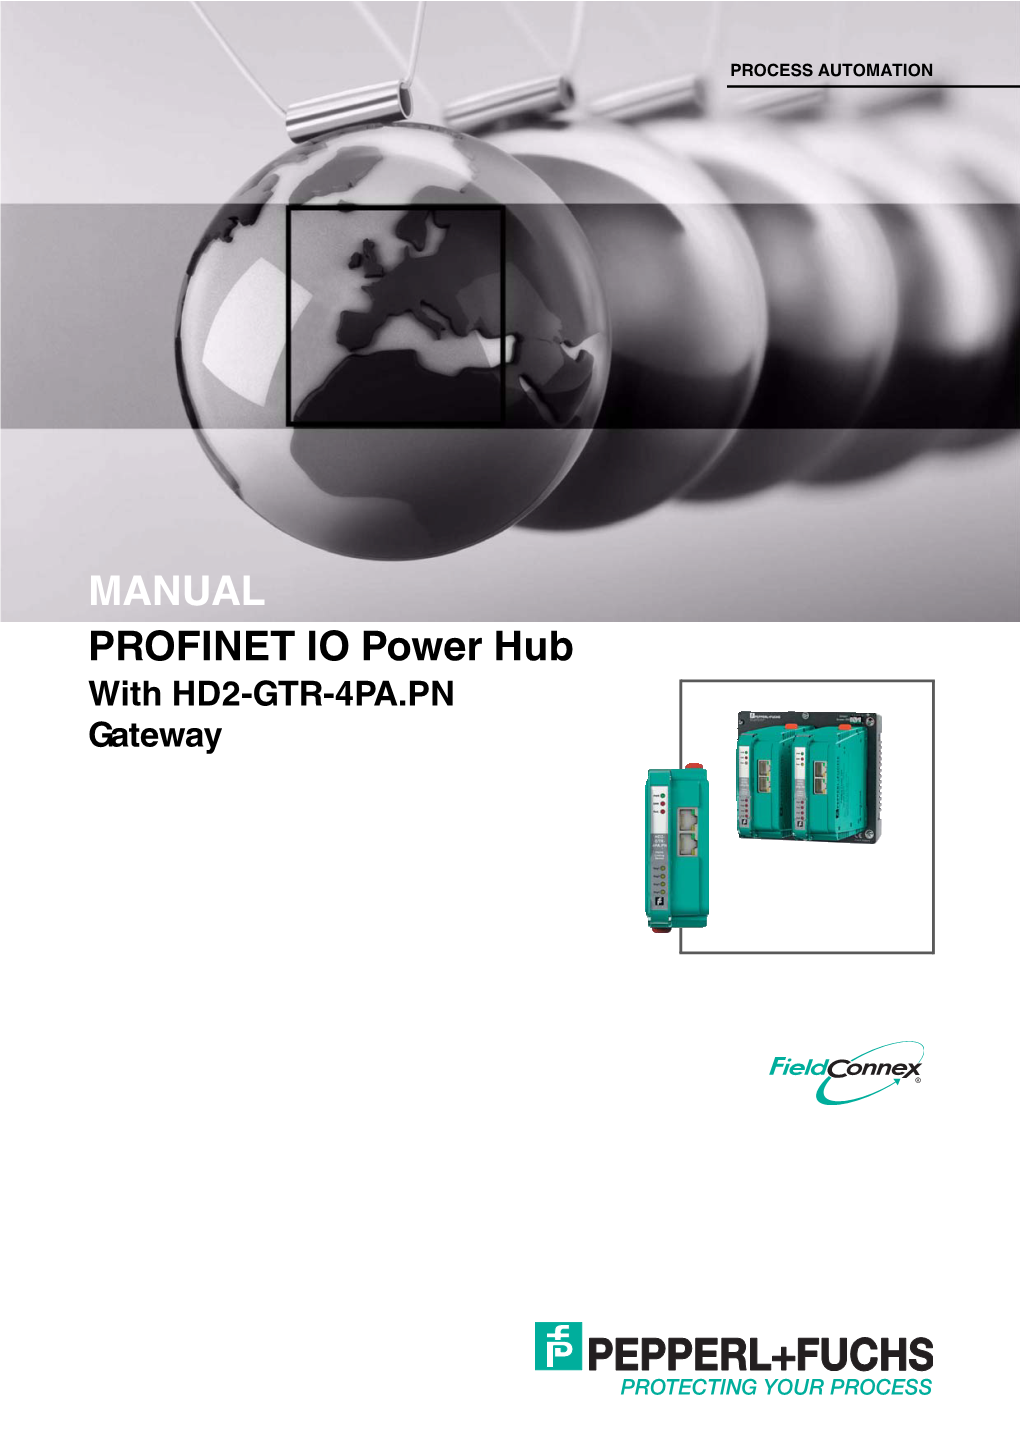 PROFINET IO Power Hub with HD2-GTR-4PA.PN Gat Eway